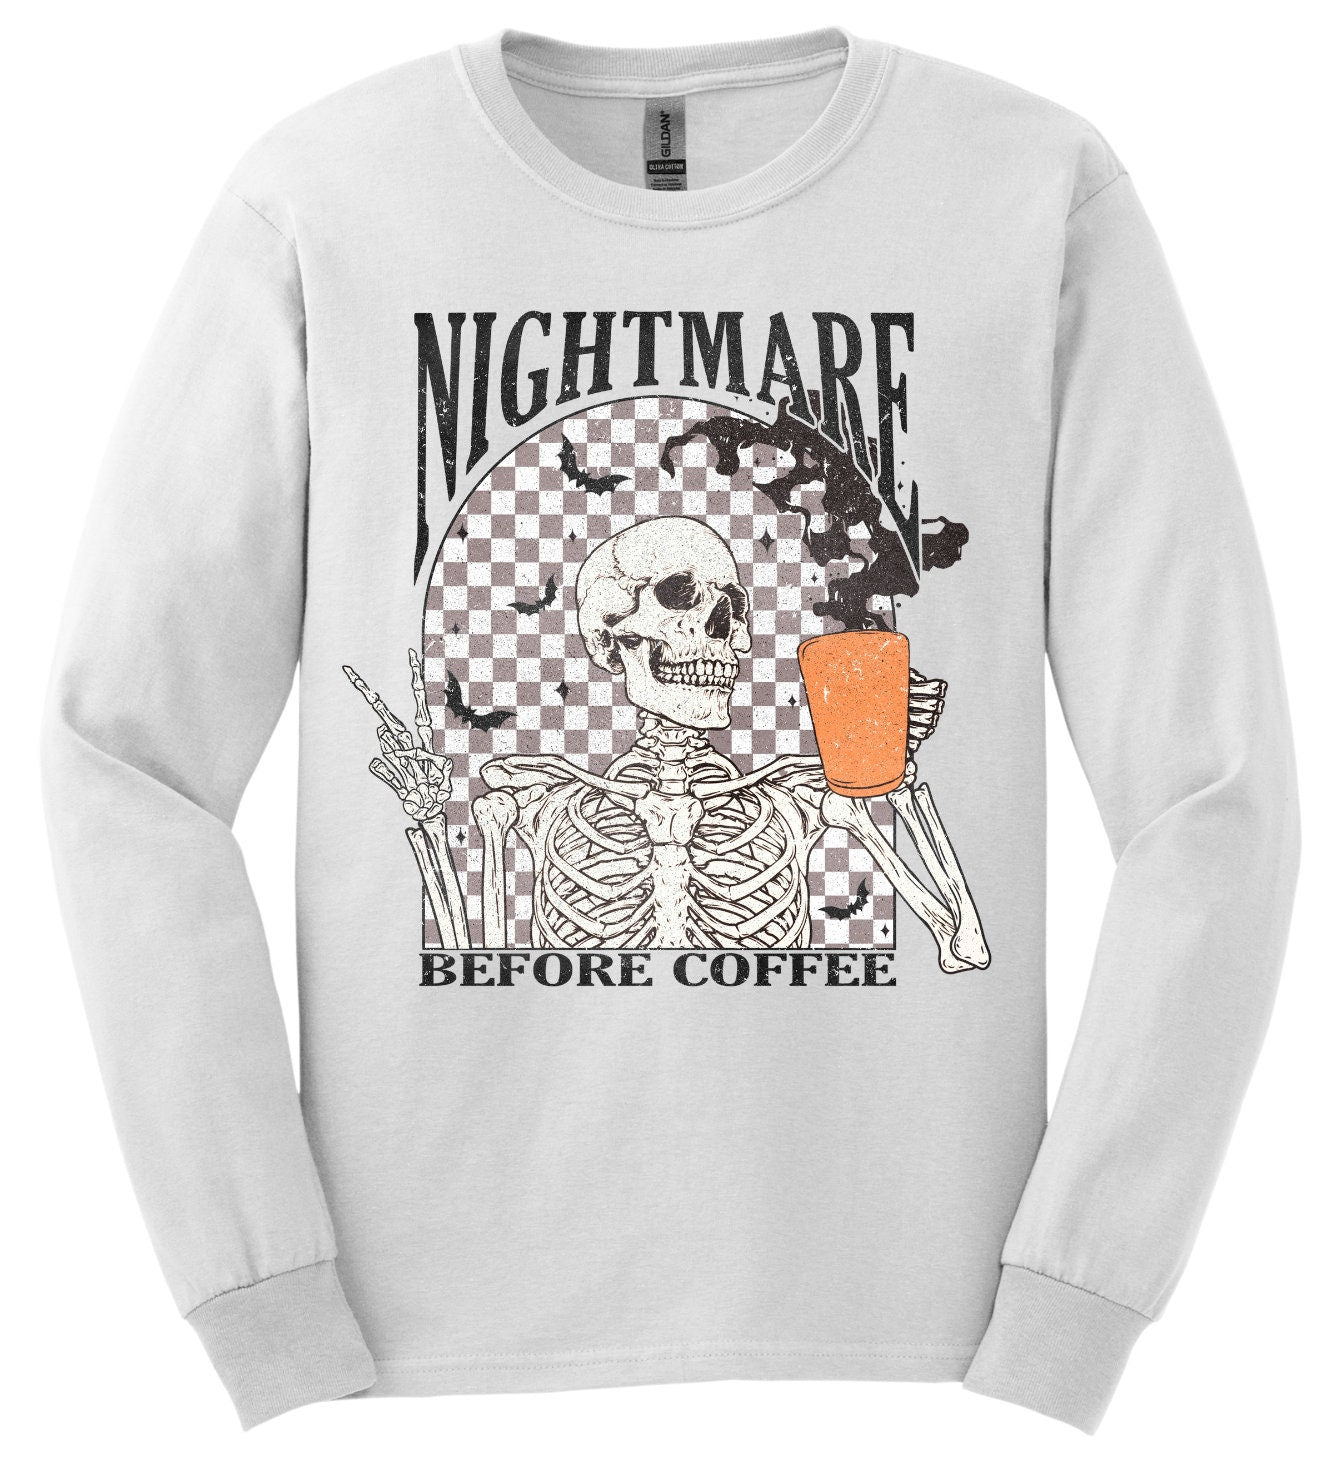 Nightmare Before Coffee; Long Sleeve & Short Sleeve Cotton Shirt, Adult Tee